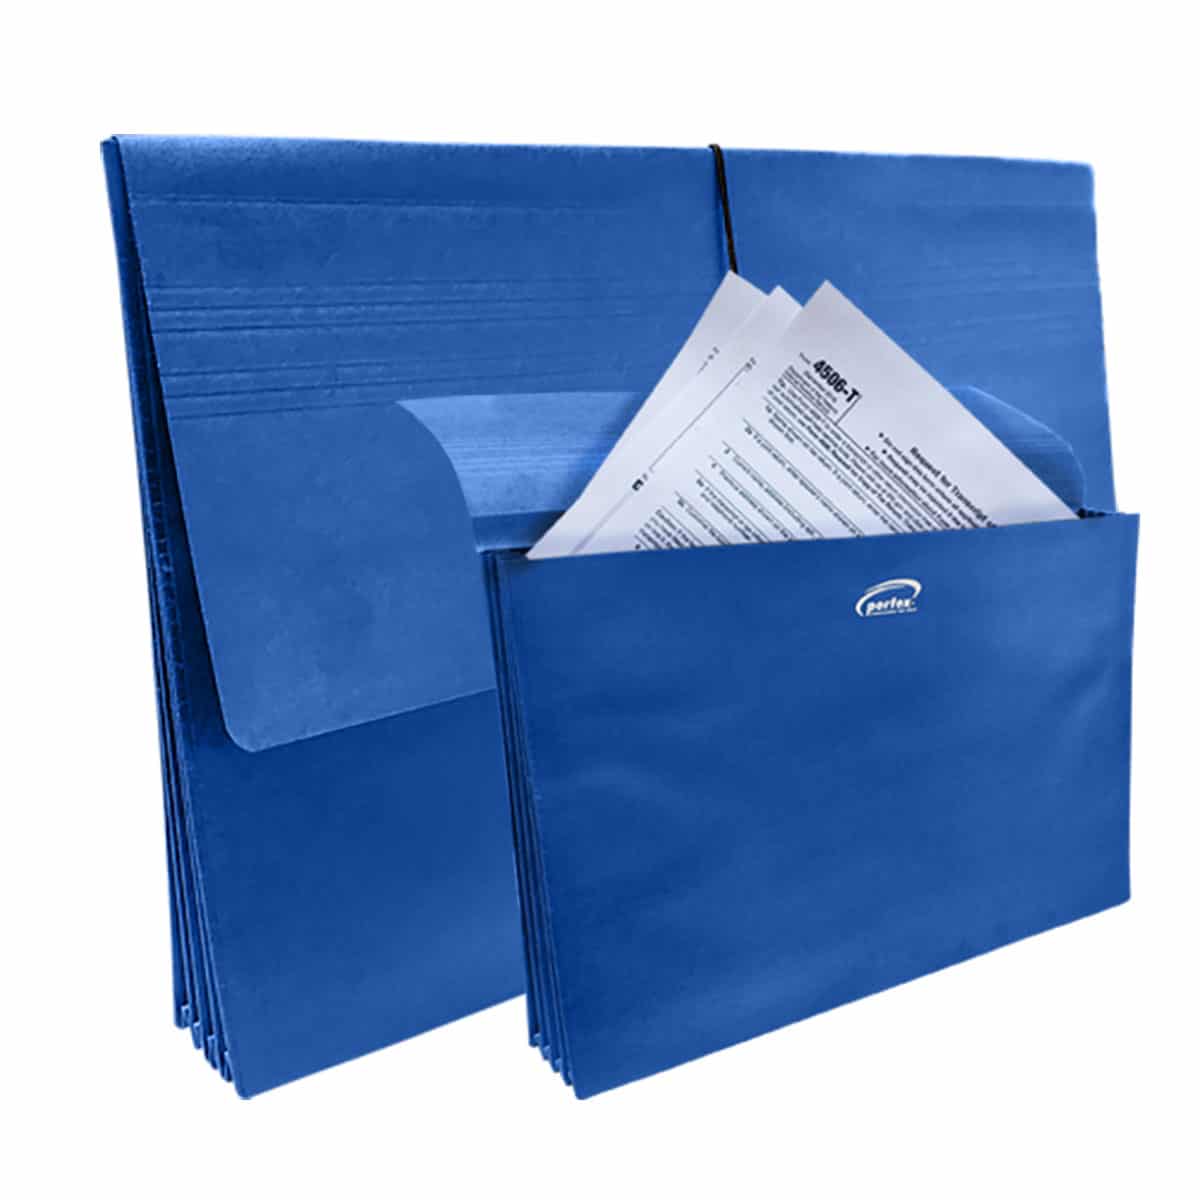 Folder Expandible tipo bolsa para archivar color Azul Tamaño Carta - PERFEX